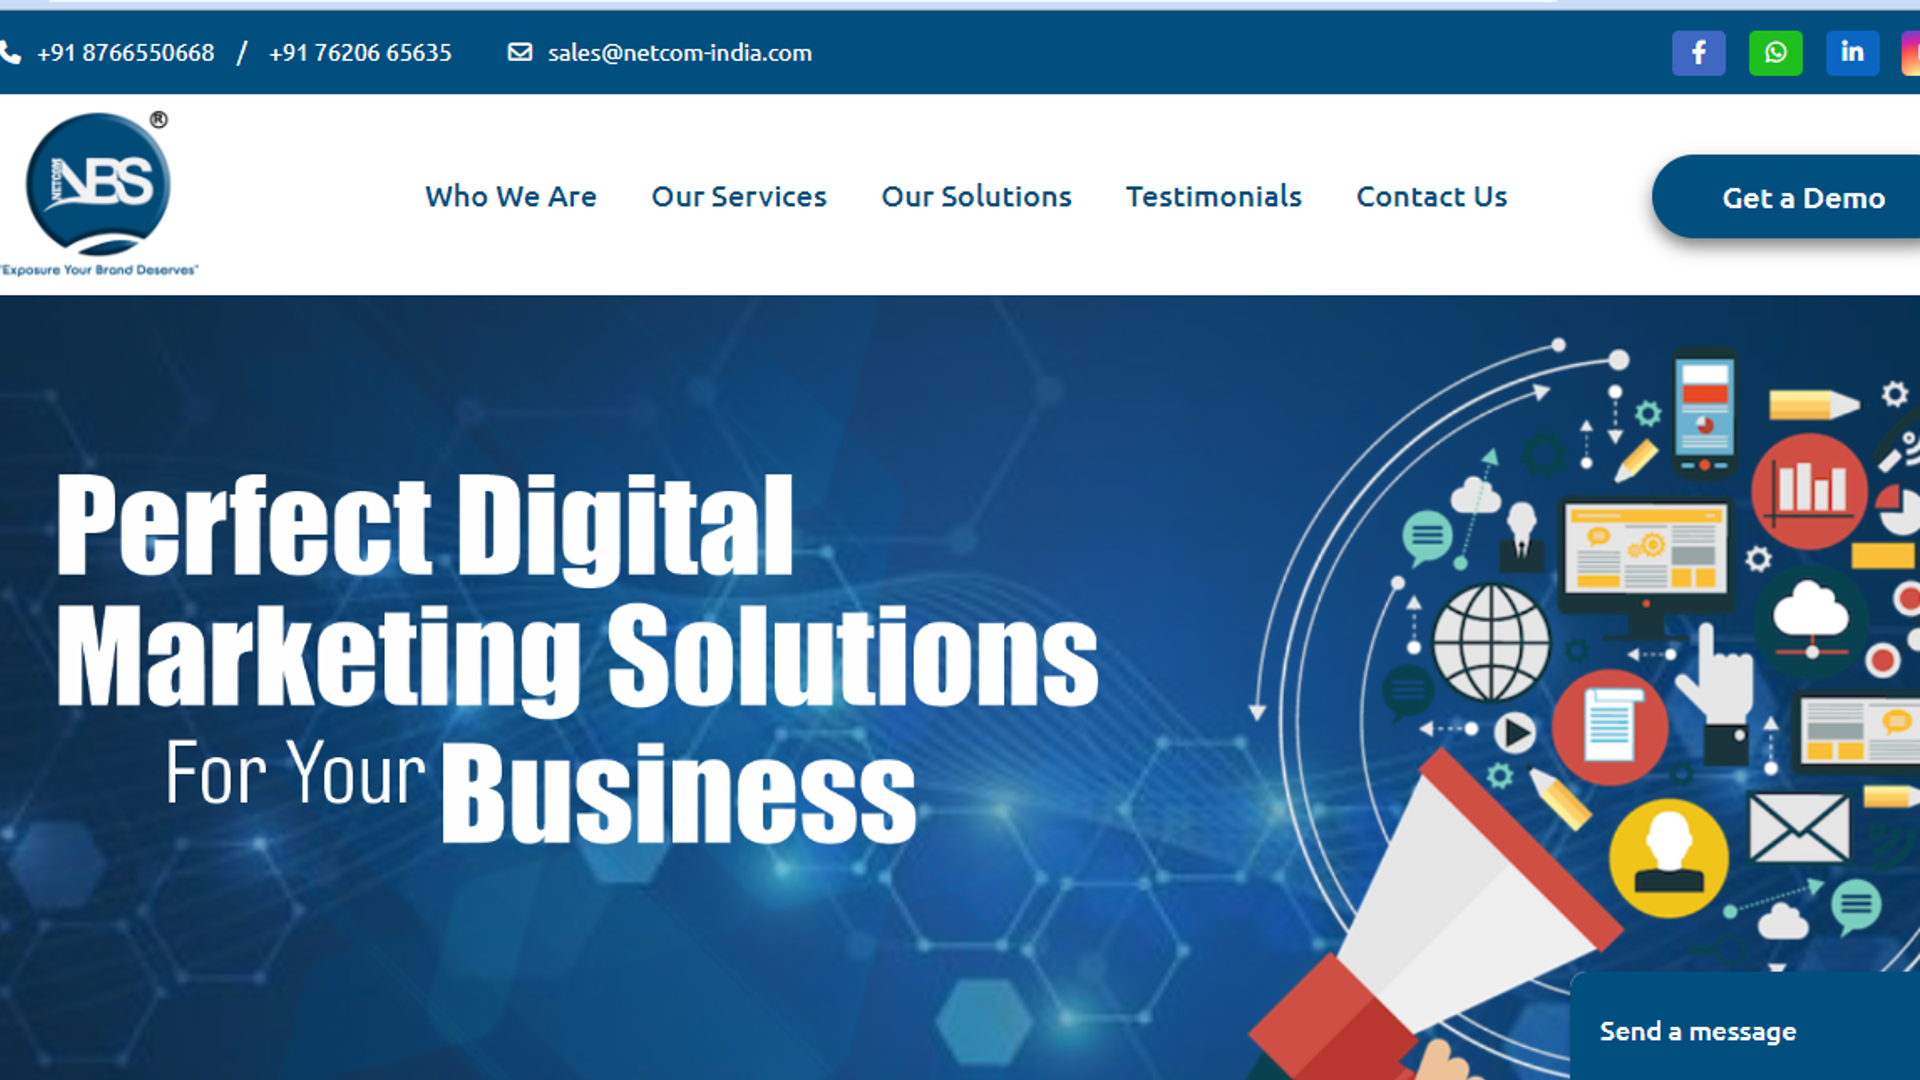 NetCom Business Solutions Pvt. Ltd.